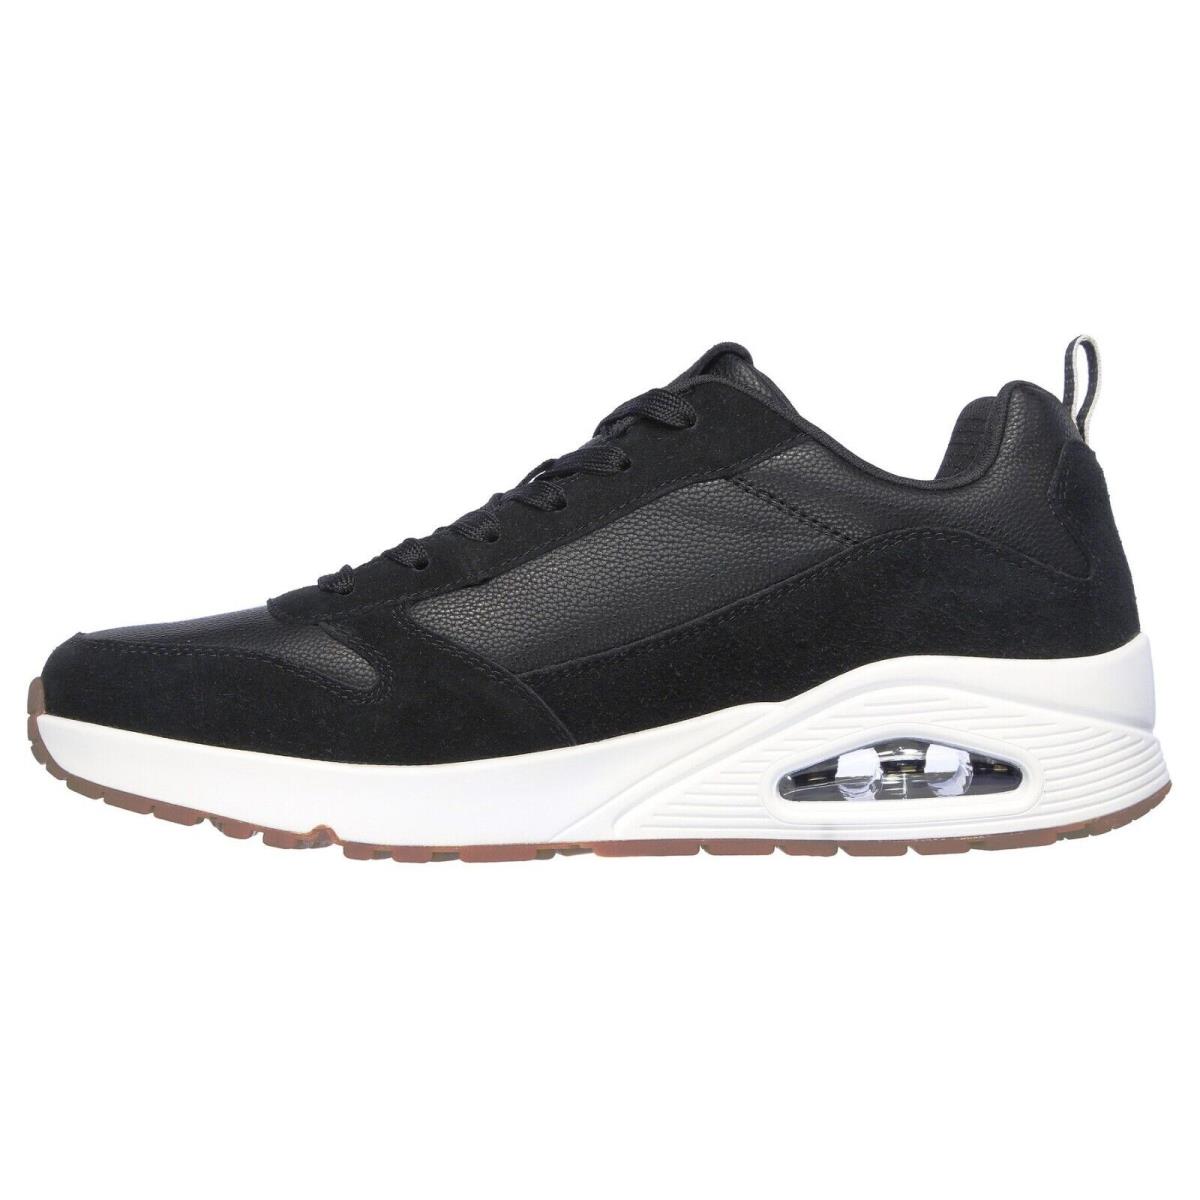 Skechers shoes Uno Stacre - Black/White 12